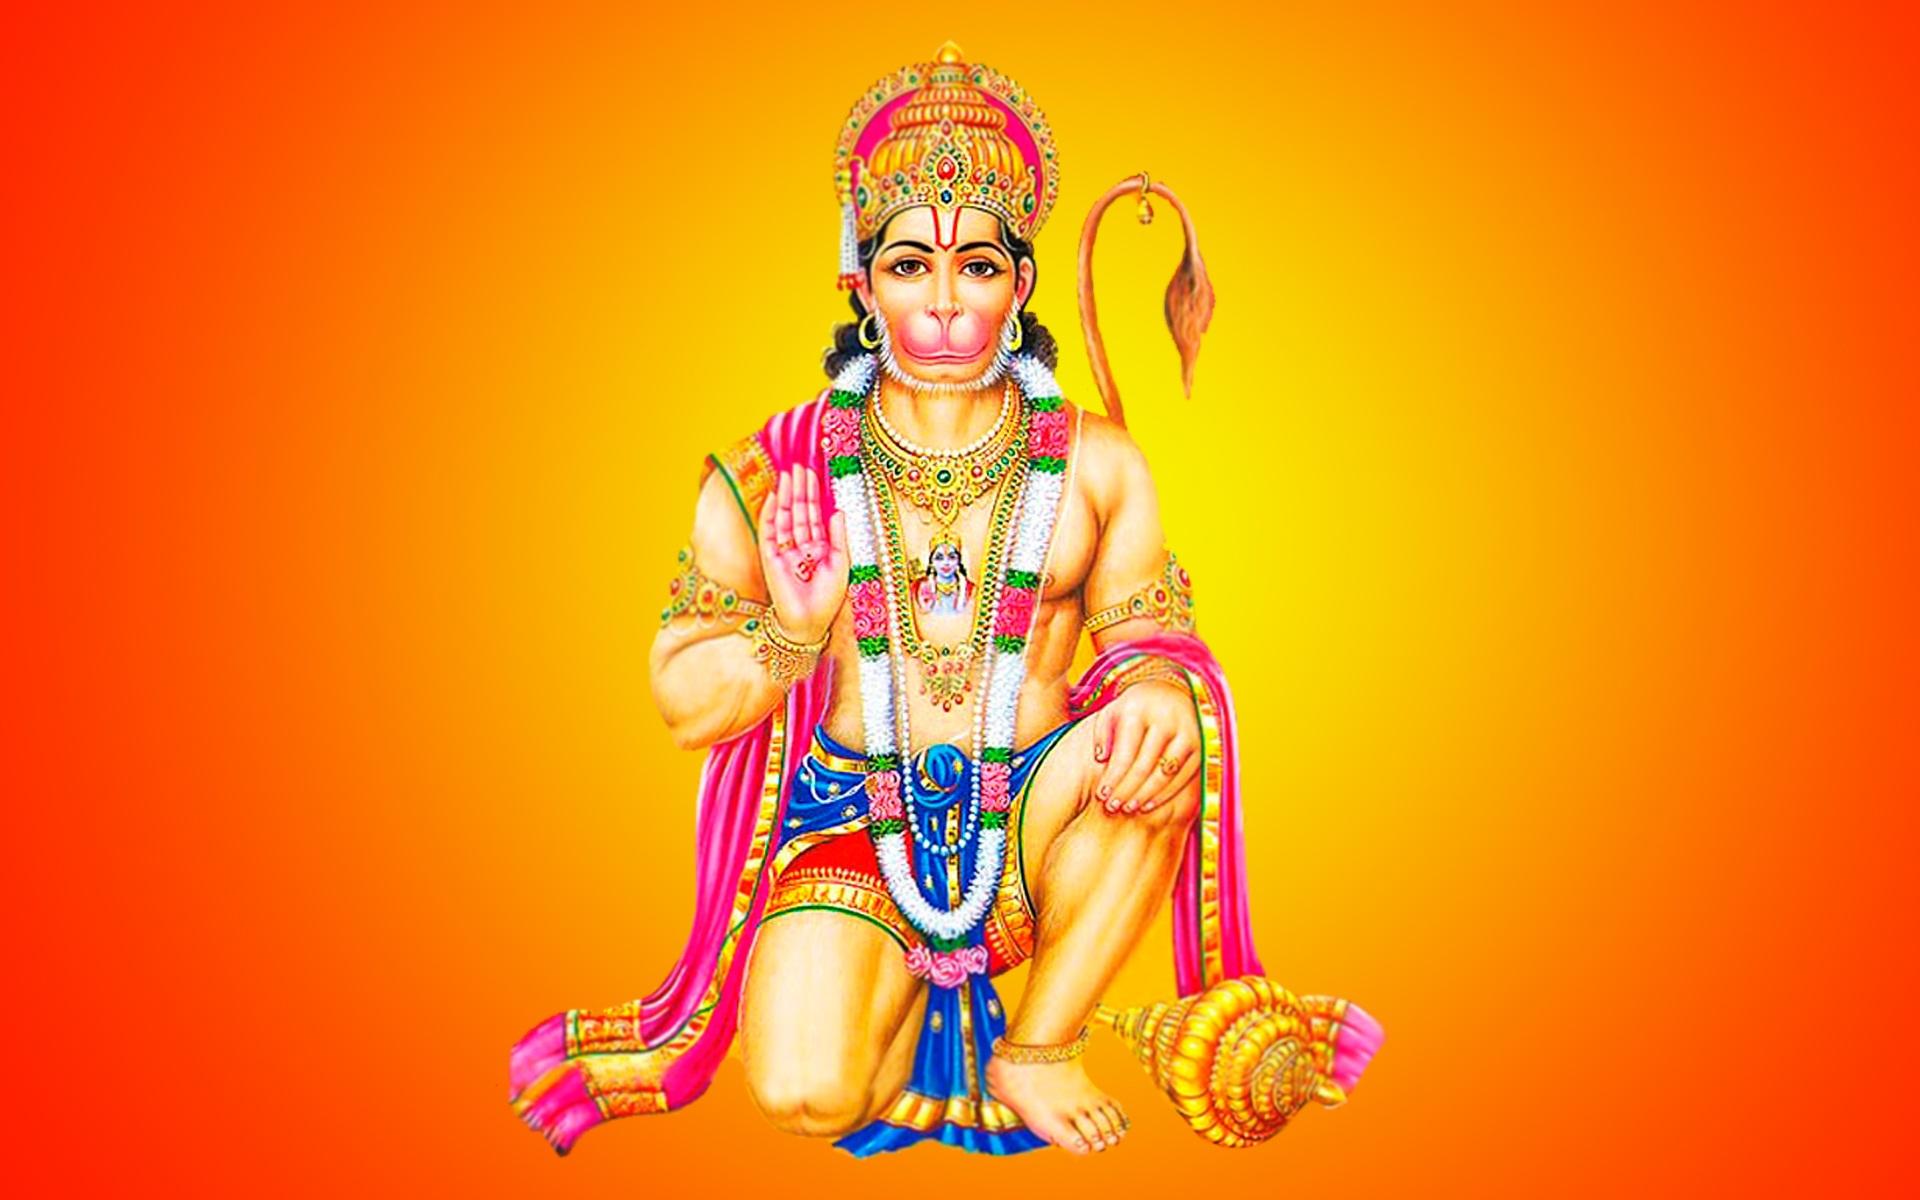 lord hanuman desktop HD wallpaper. sekspic.com: Free image hosting